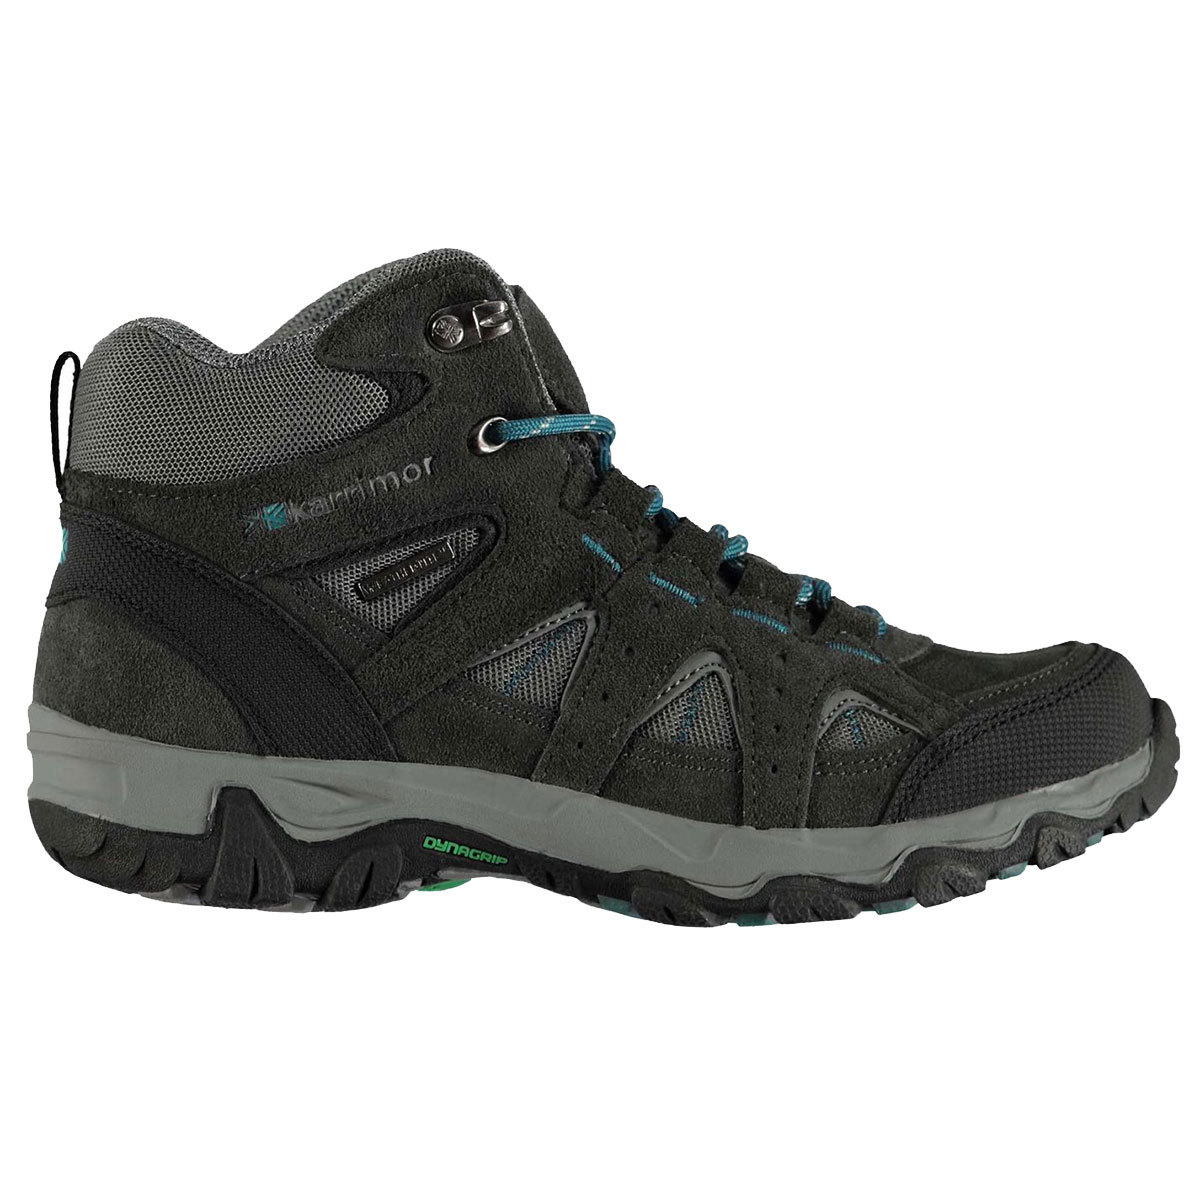 Karrimor Big Boys' Mount Mid Waterproof Hiking Shoes - Black, 7.5